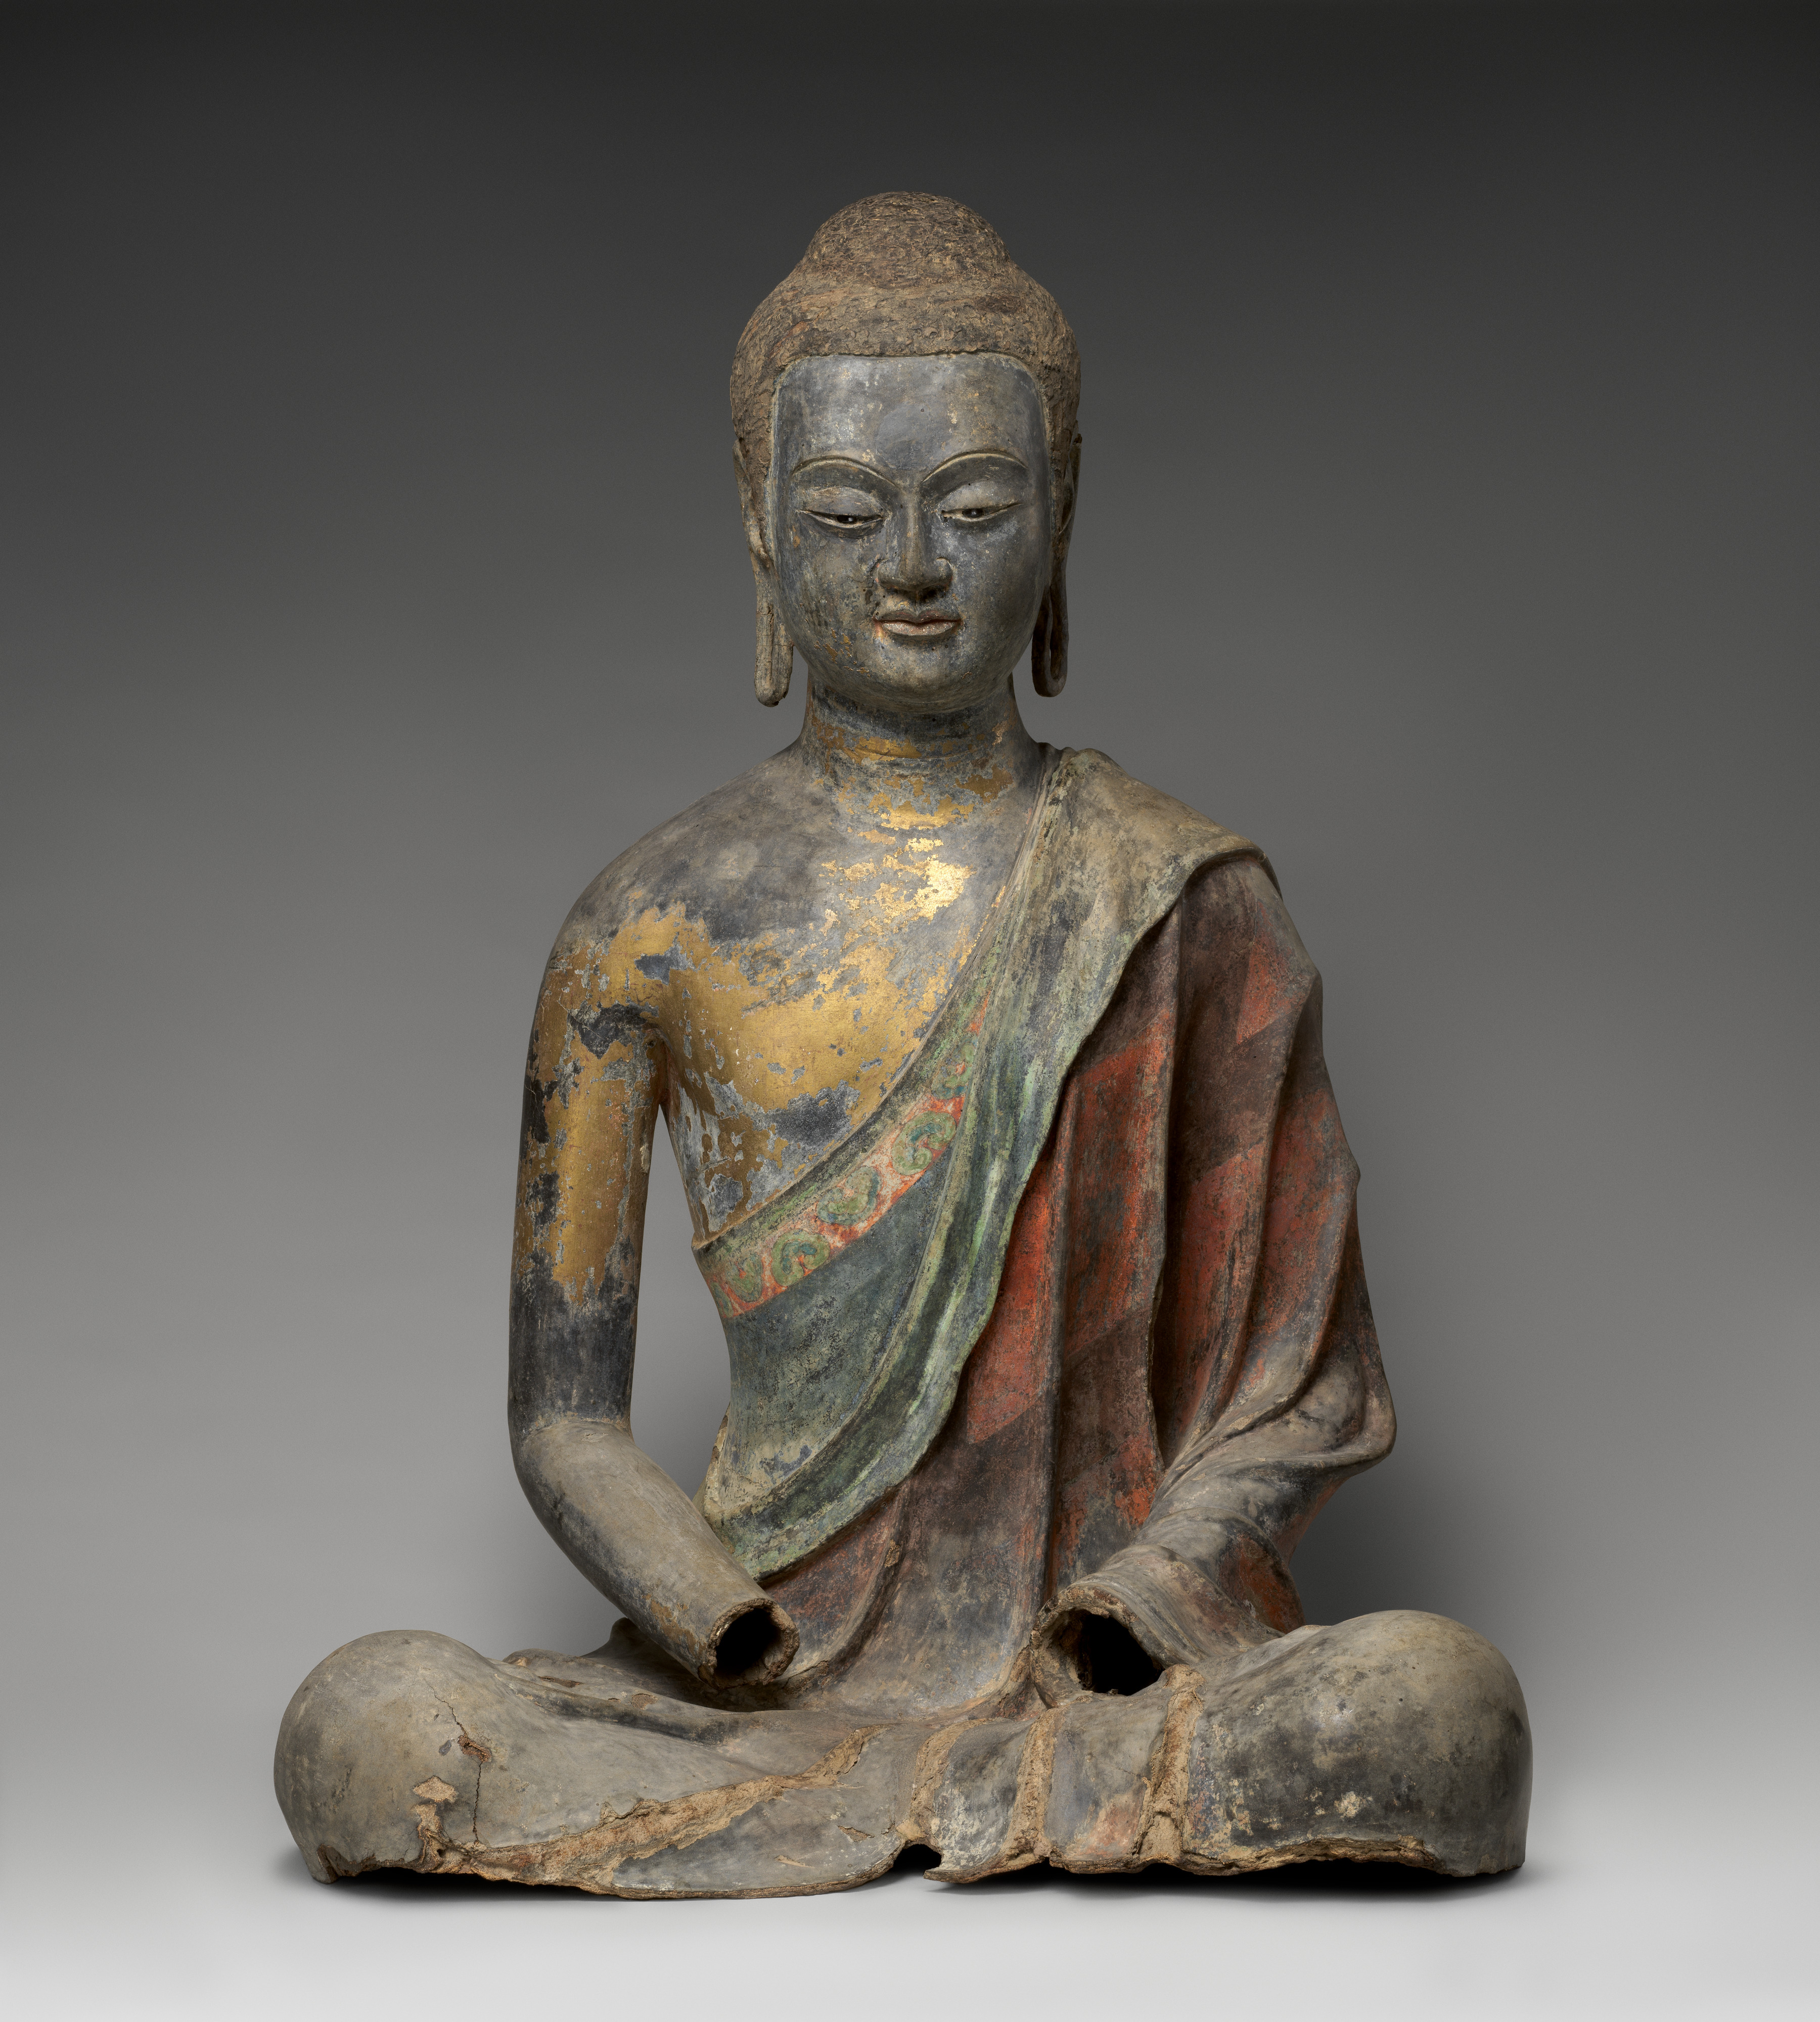 Statua di Buddha Amitabha